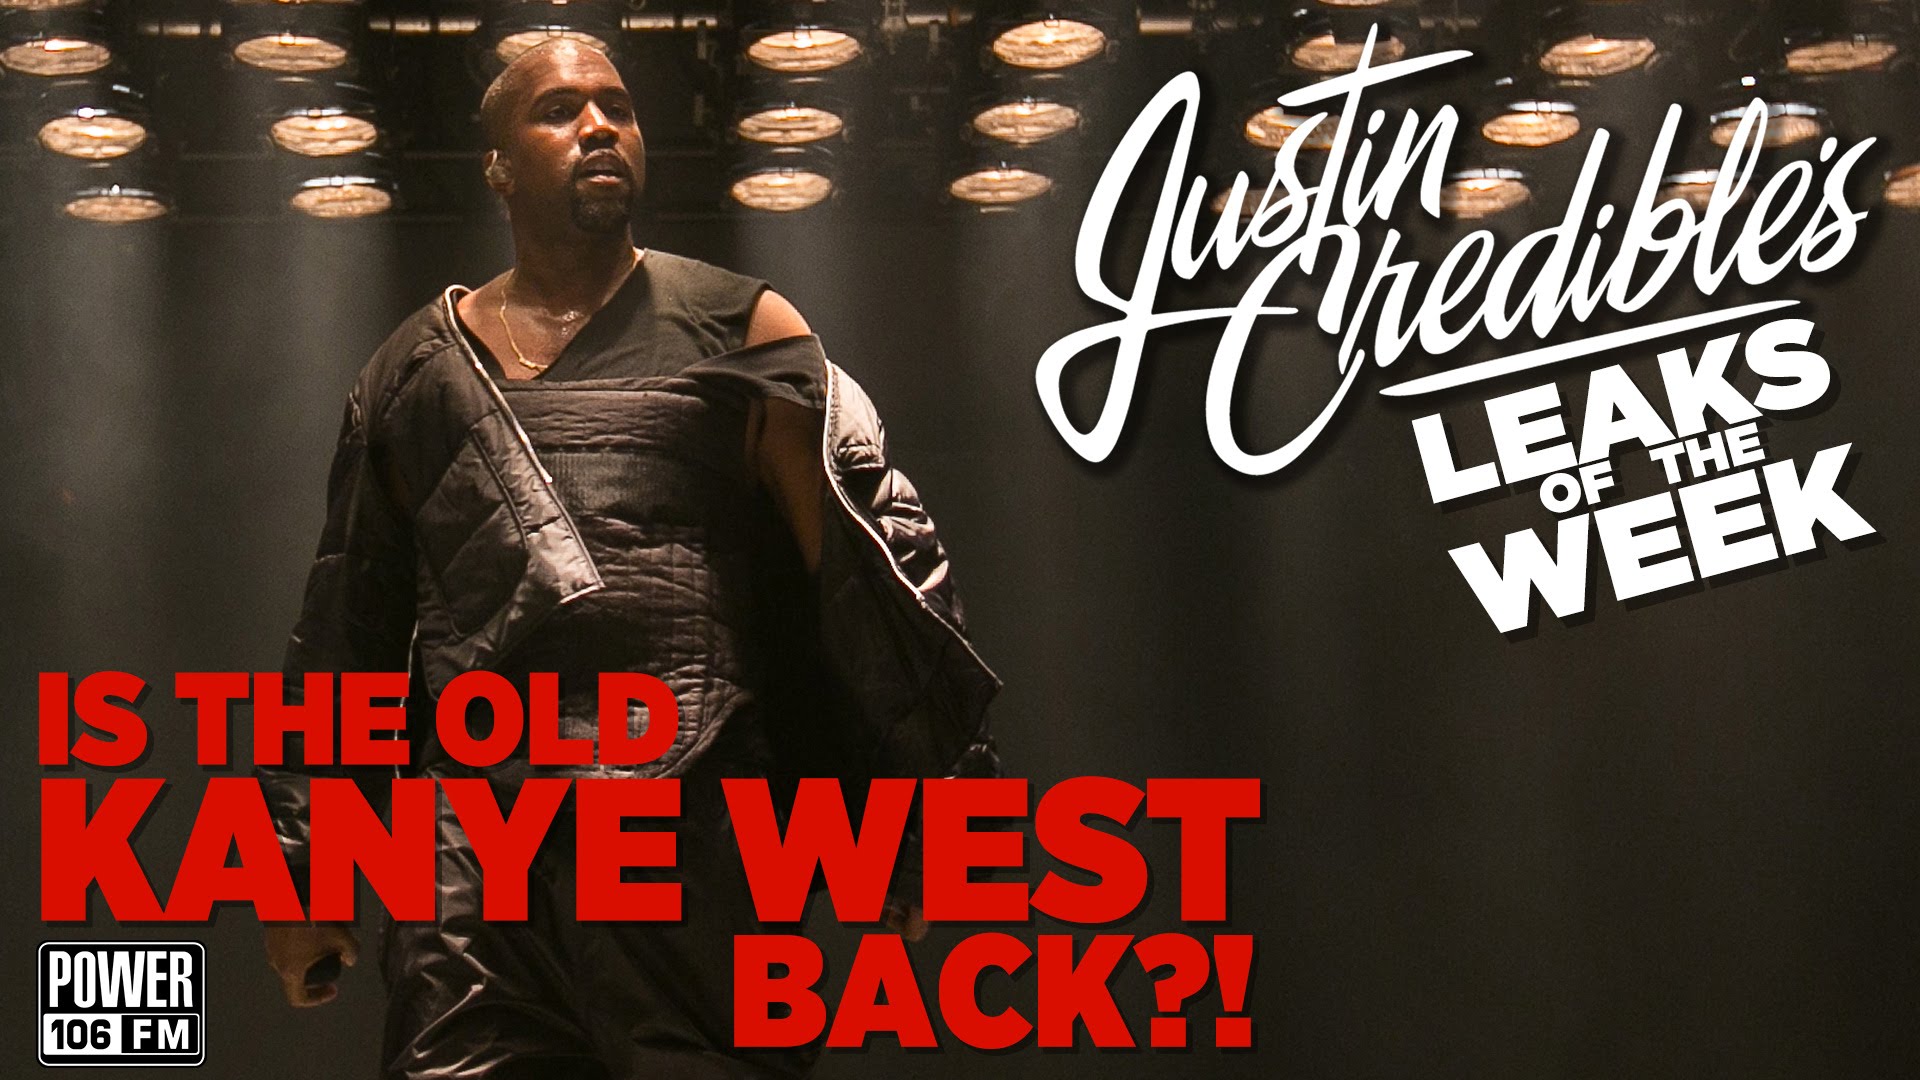 Justin Credible’s #LeaksOfTheWeek w/ Kanye West, DJ Mustard, & AD (Video)